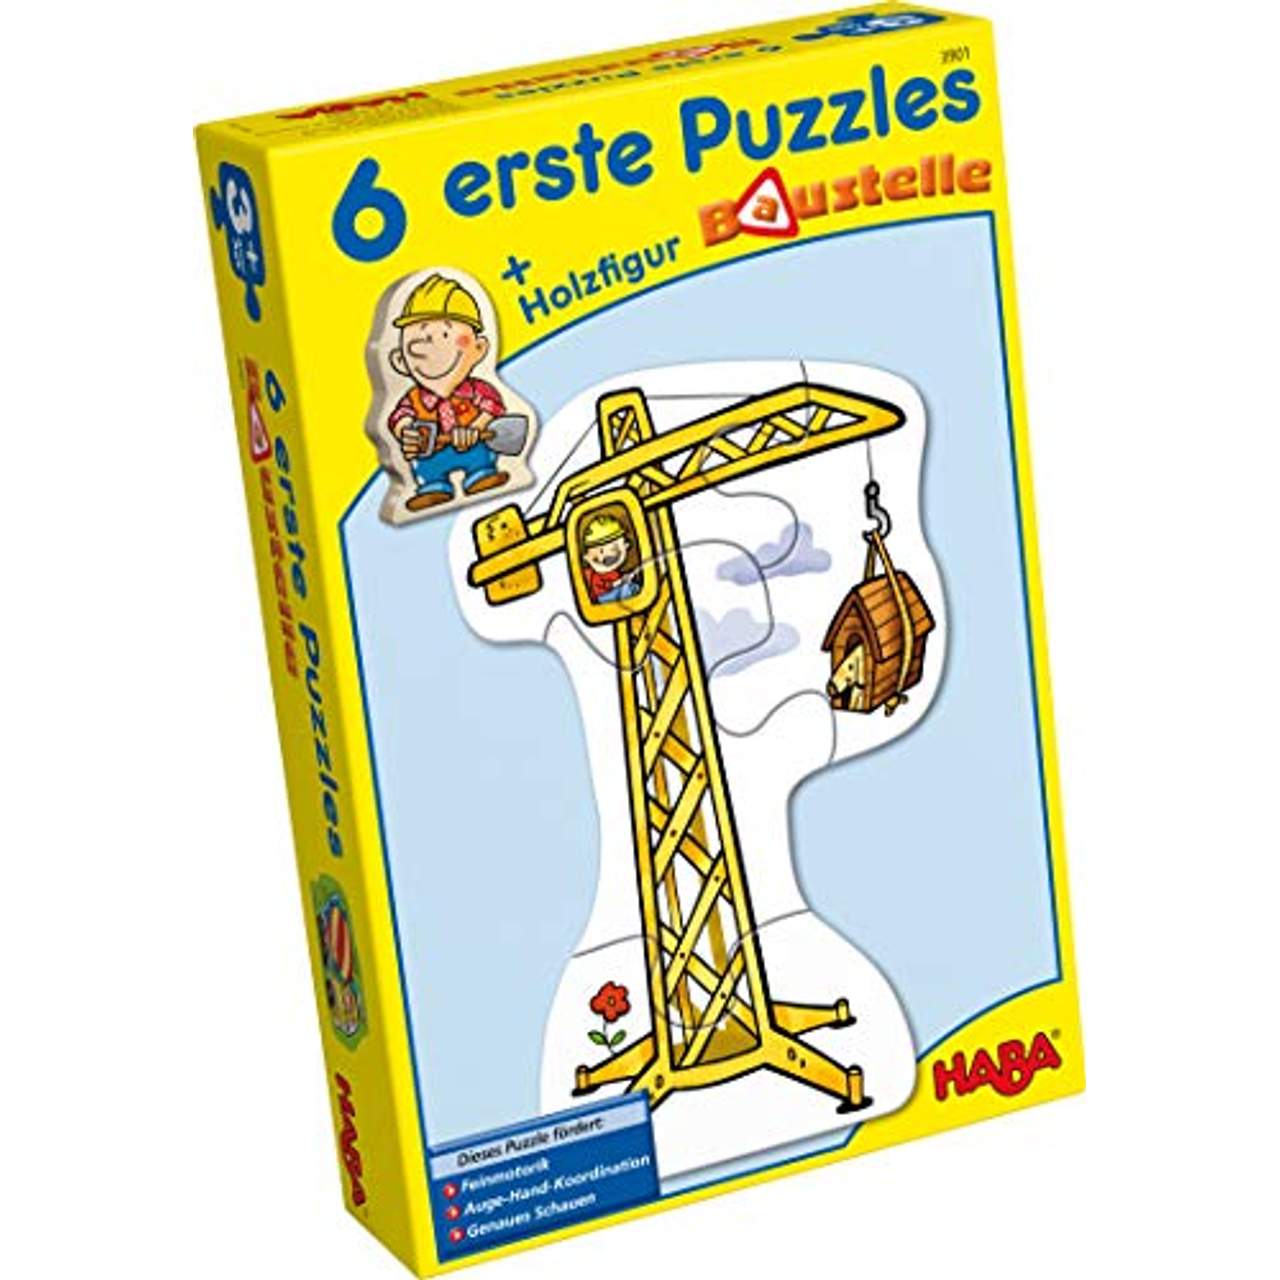 Haba 3901 6 erste Puzzles Baustelle